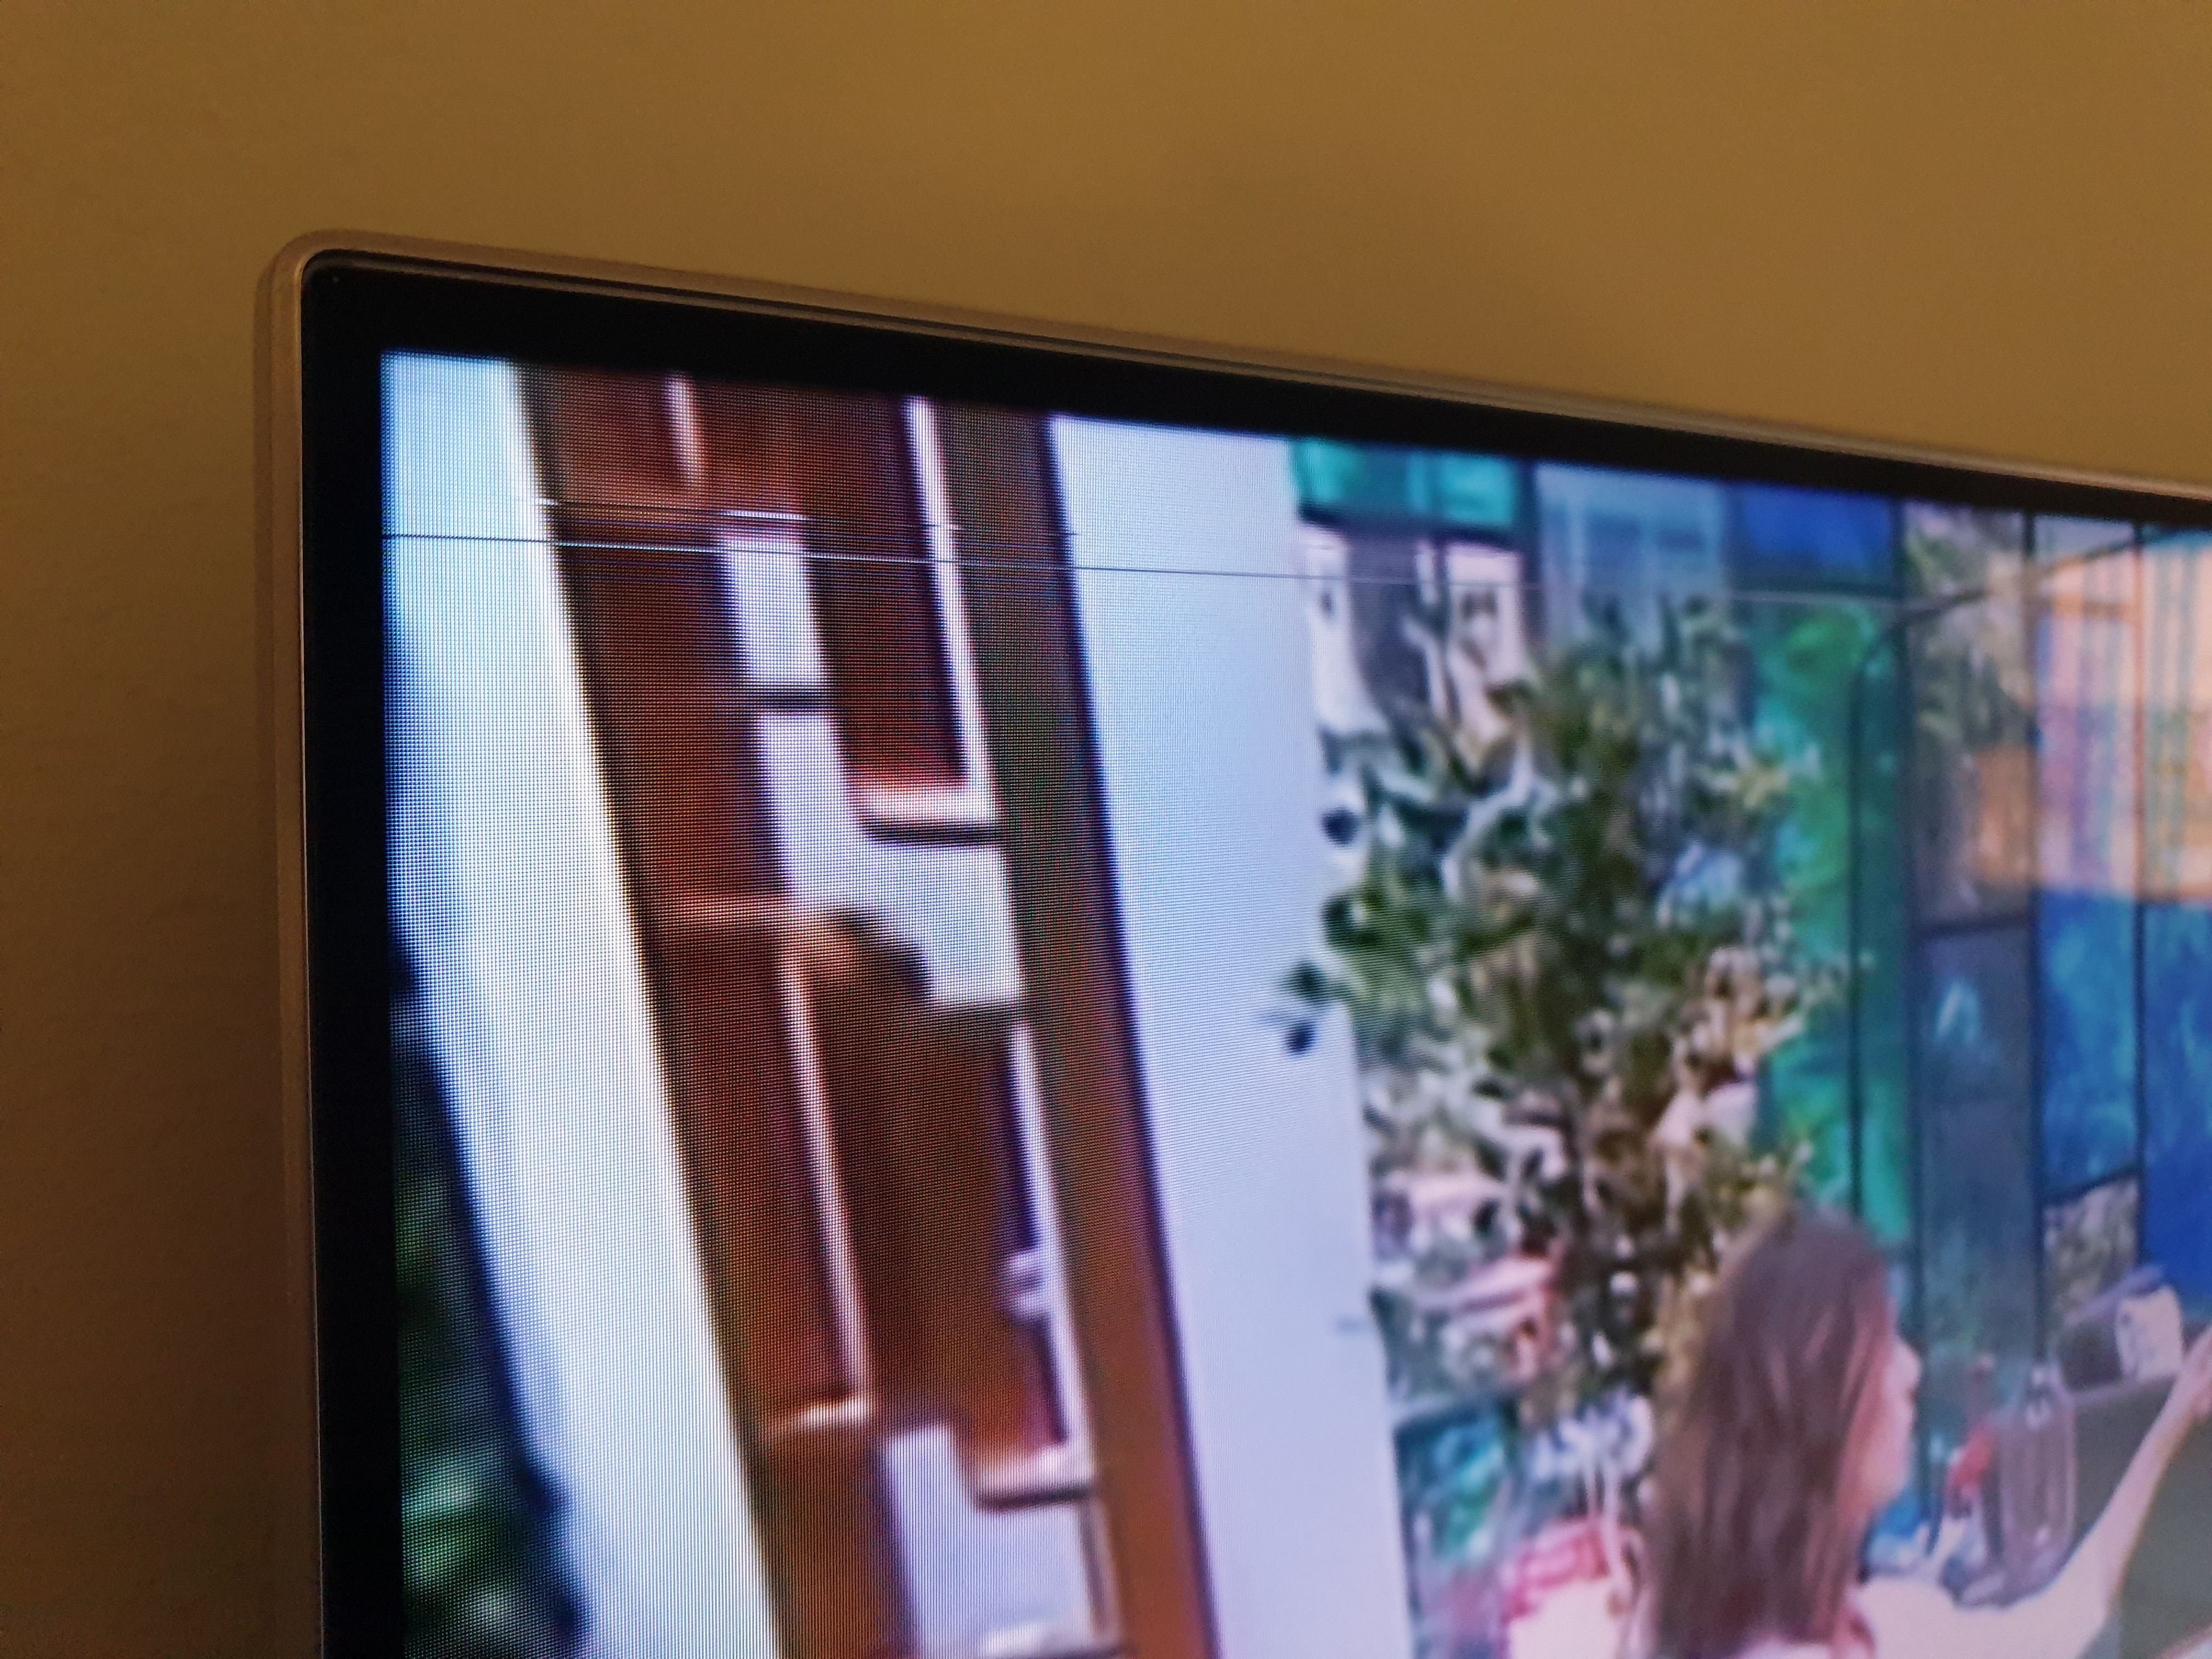 Raya vertical en tv UHD - Página 28 - Samsung Community